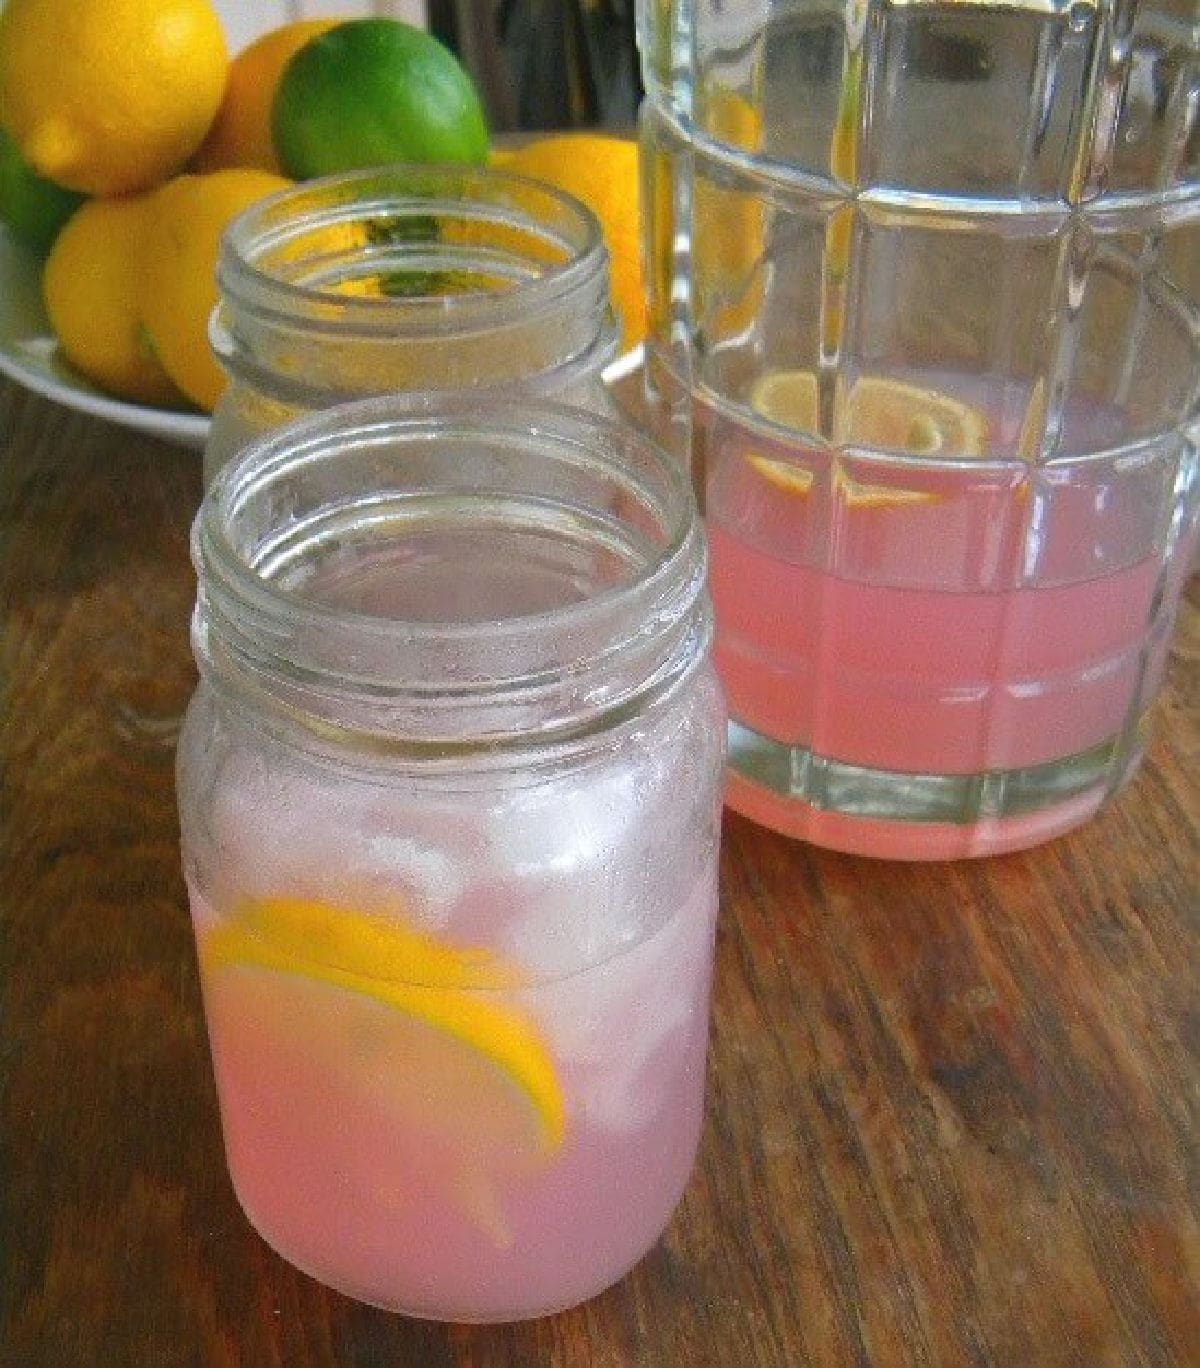 A Mason jar full of pink colored lavender lemonade cocktail.